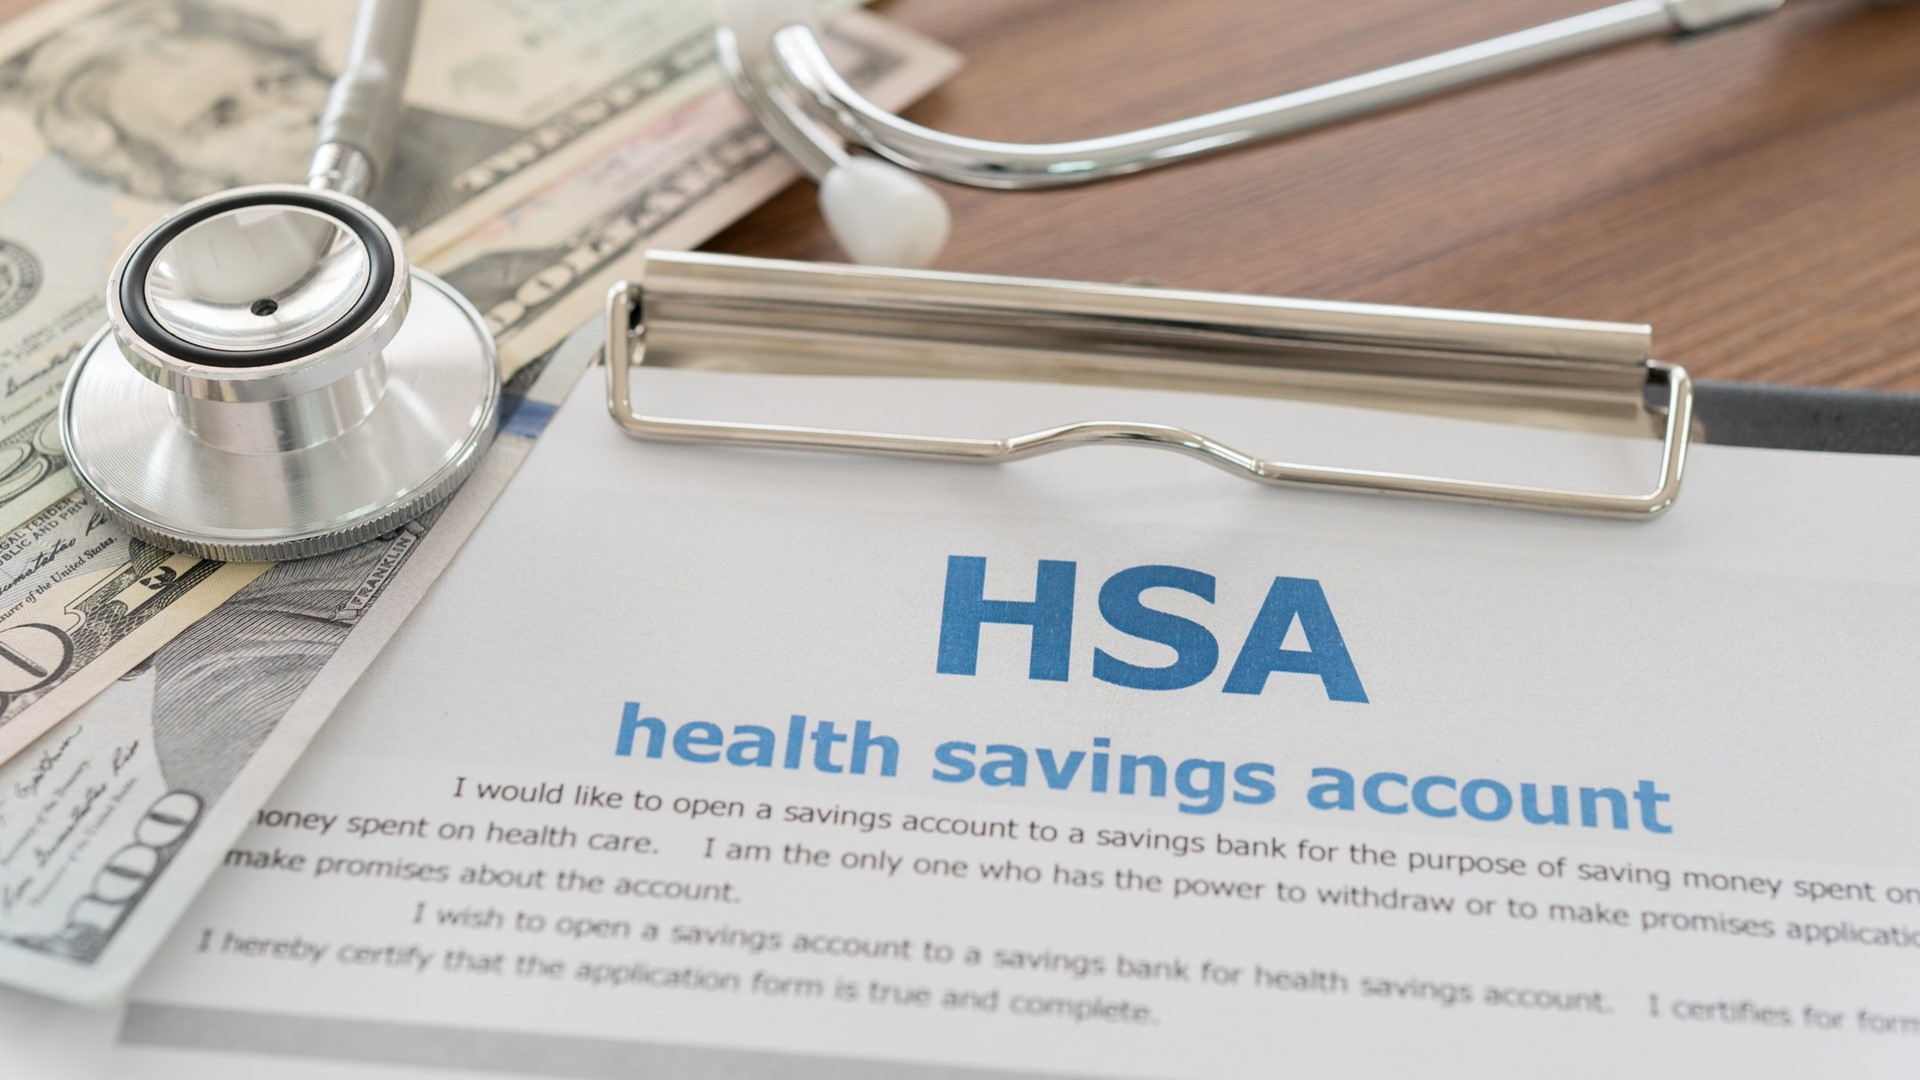 HSA Rollover: Do Health Savings Accounts Roll Over?